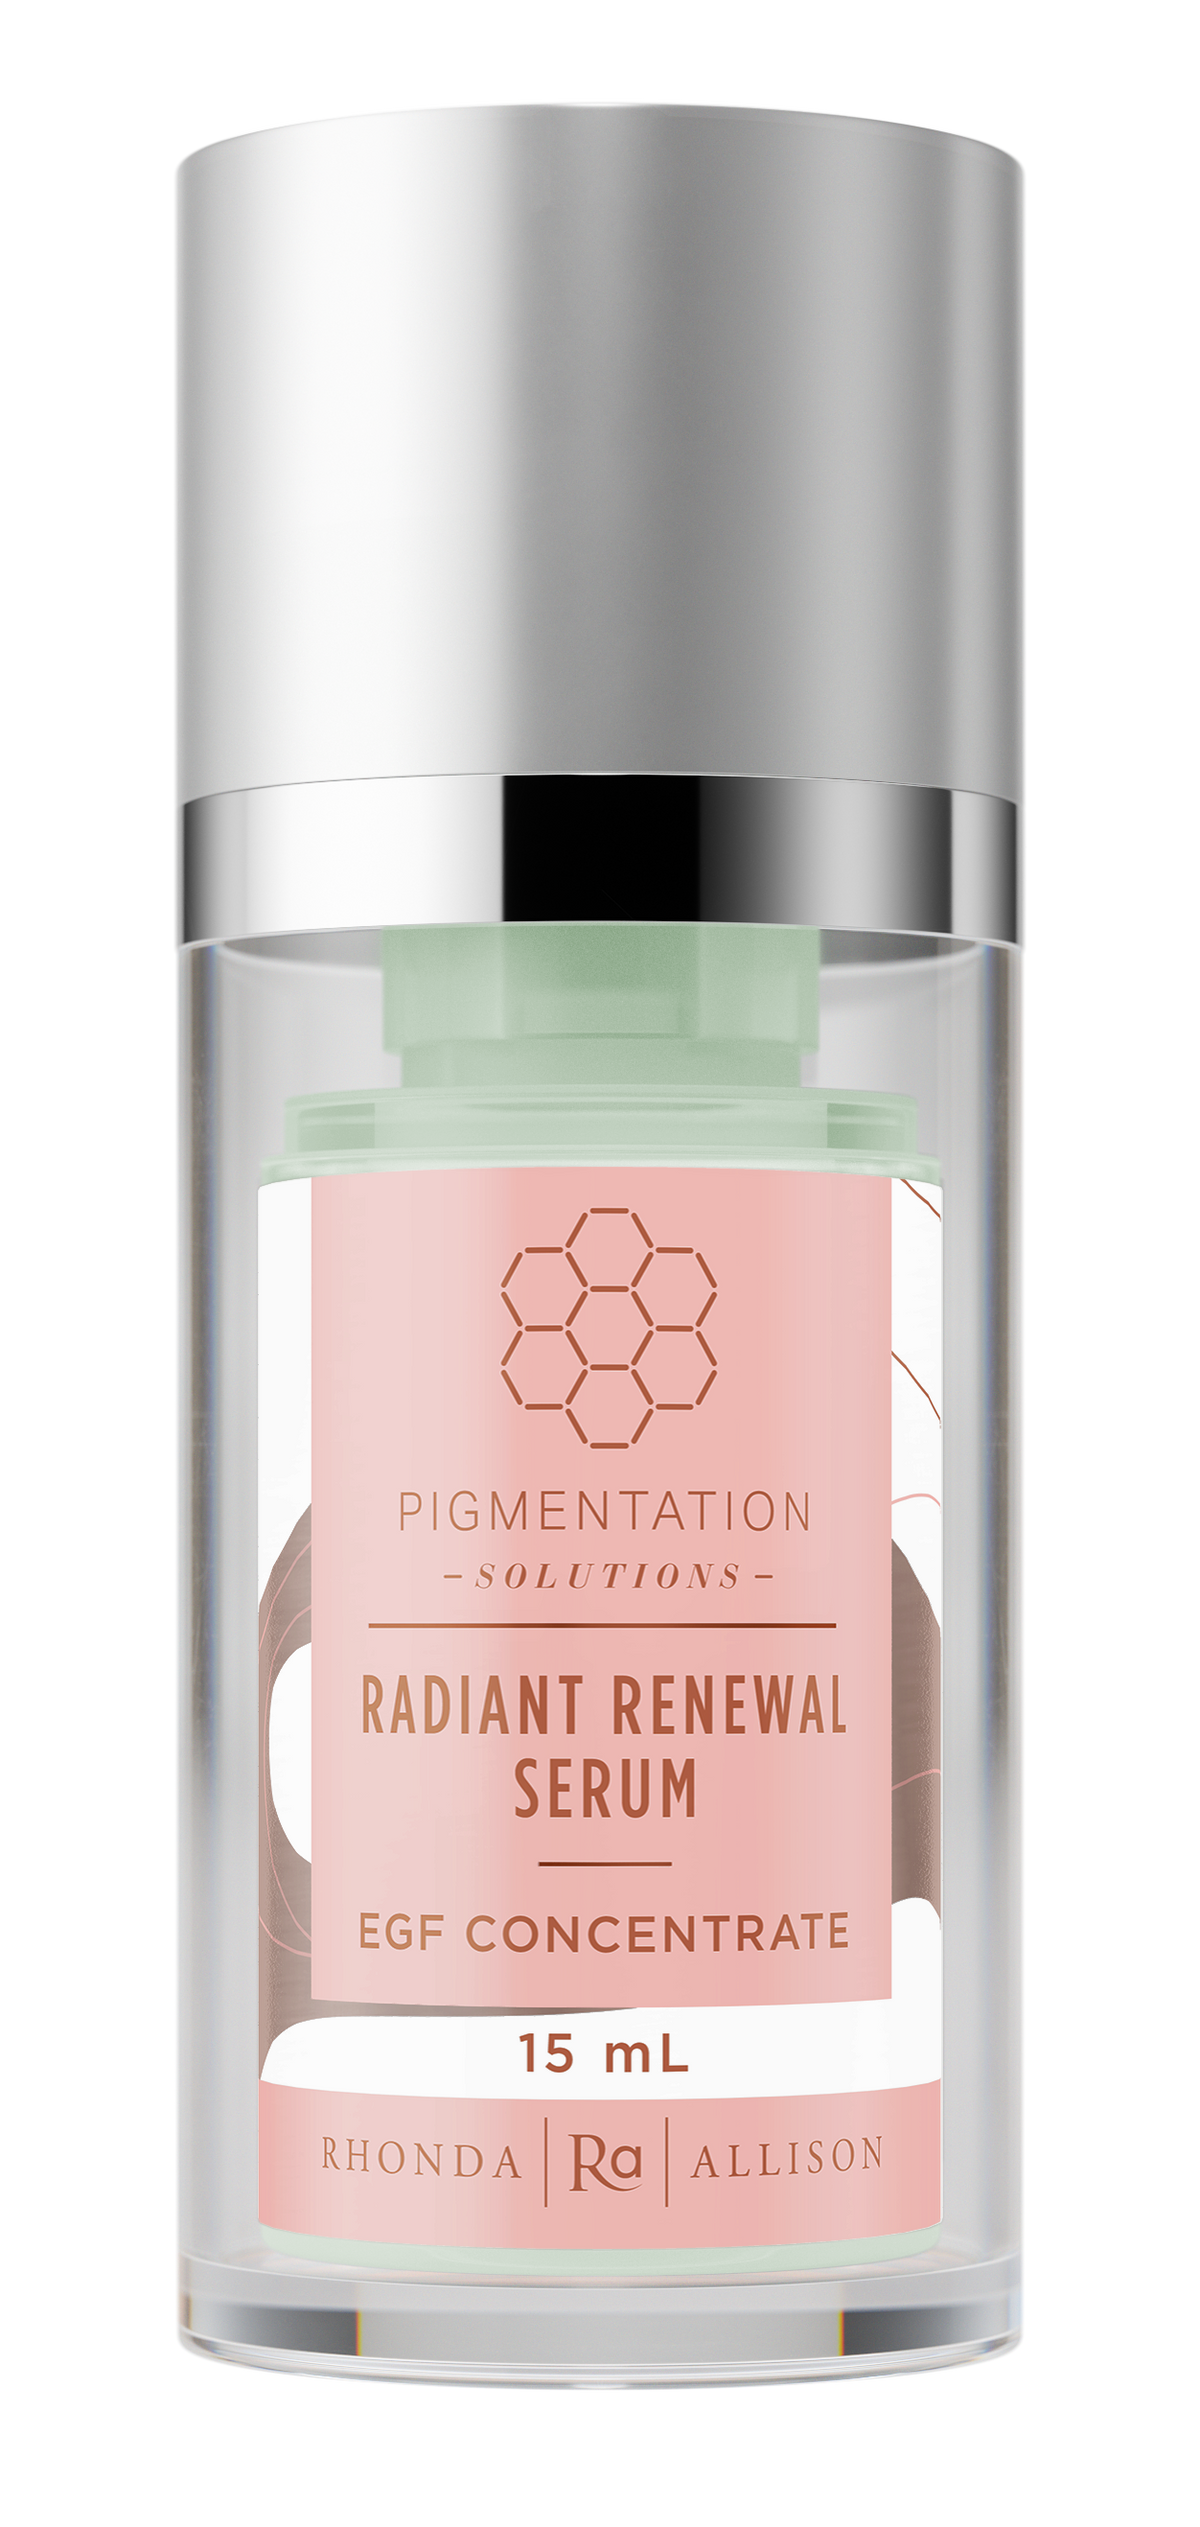 Radiant Renewal Serum